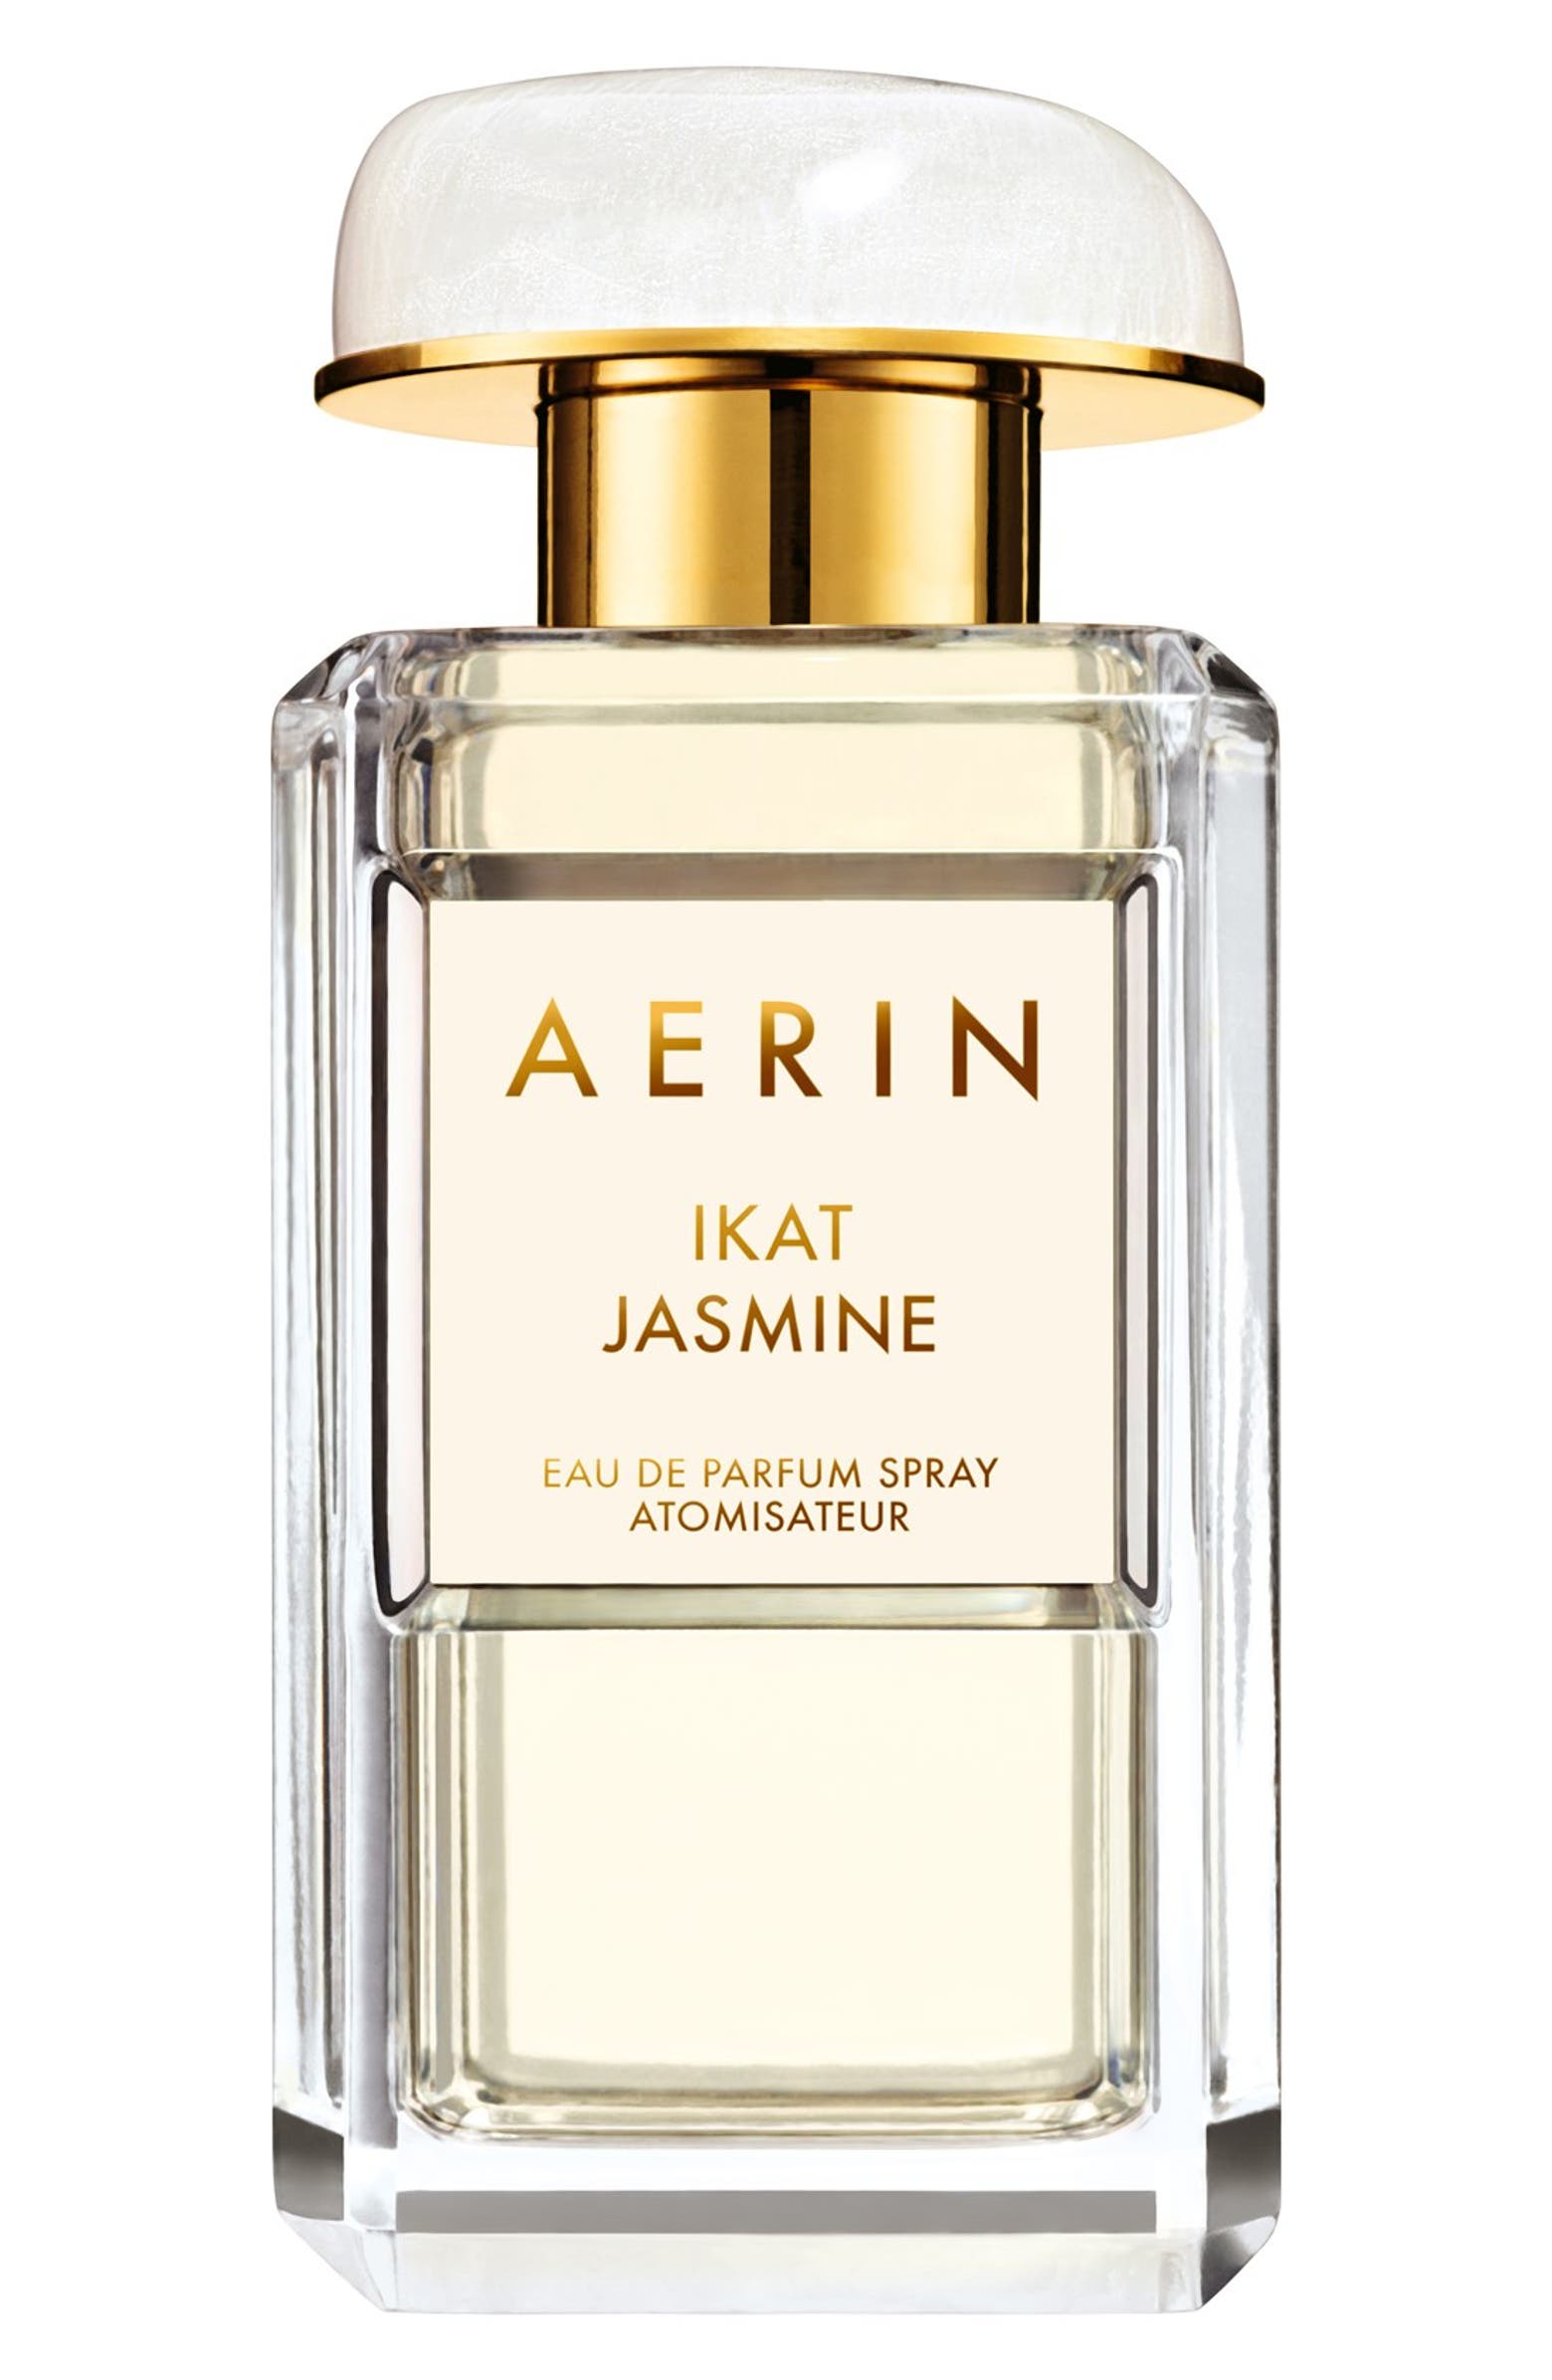 AERIN Beauty Ikat Jasmine Eau de Parfum Spray